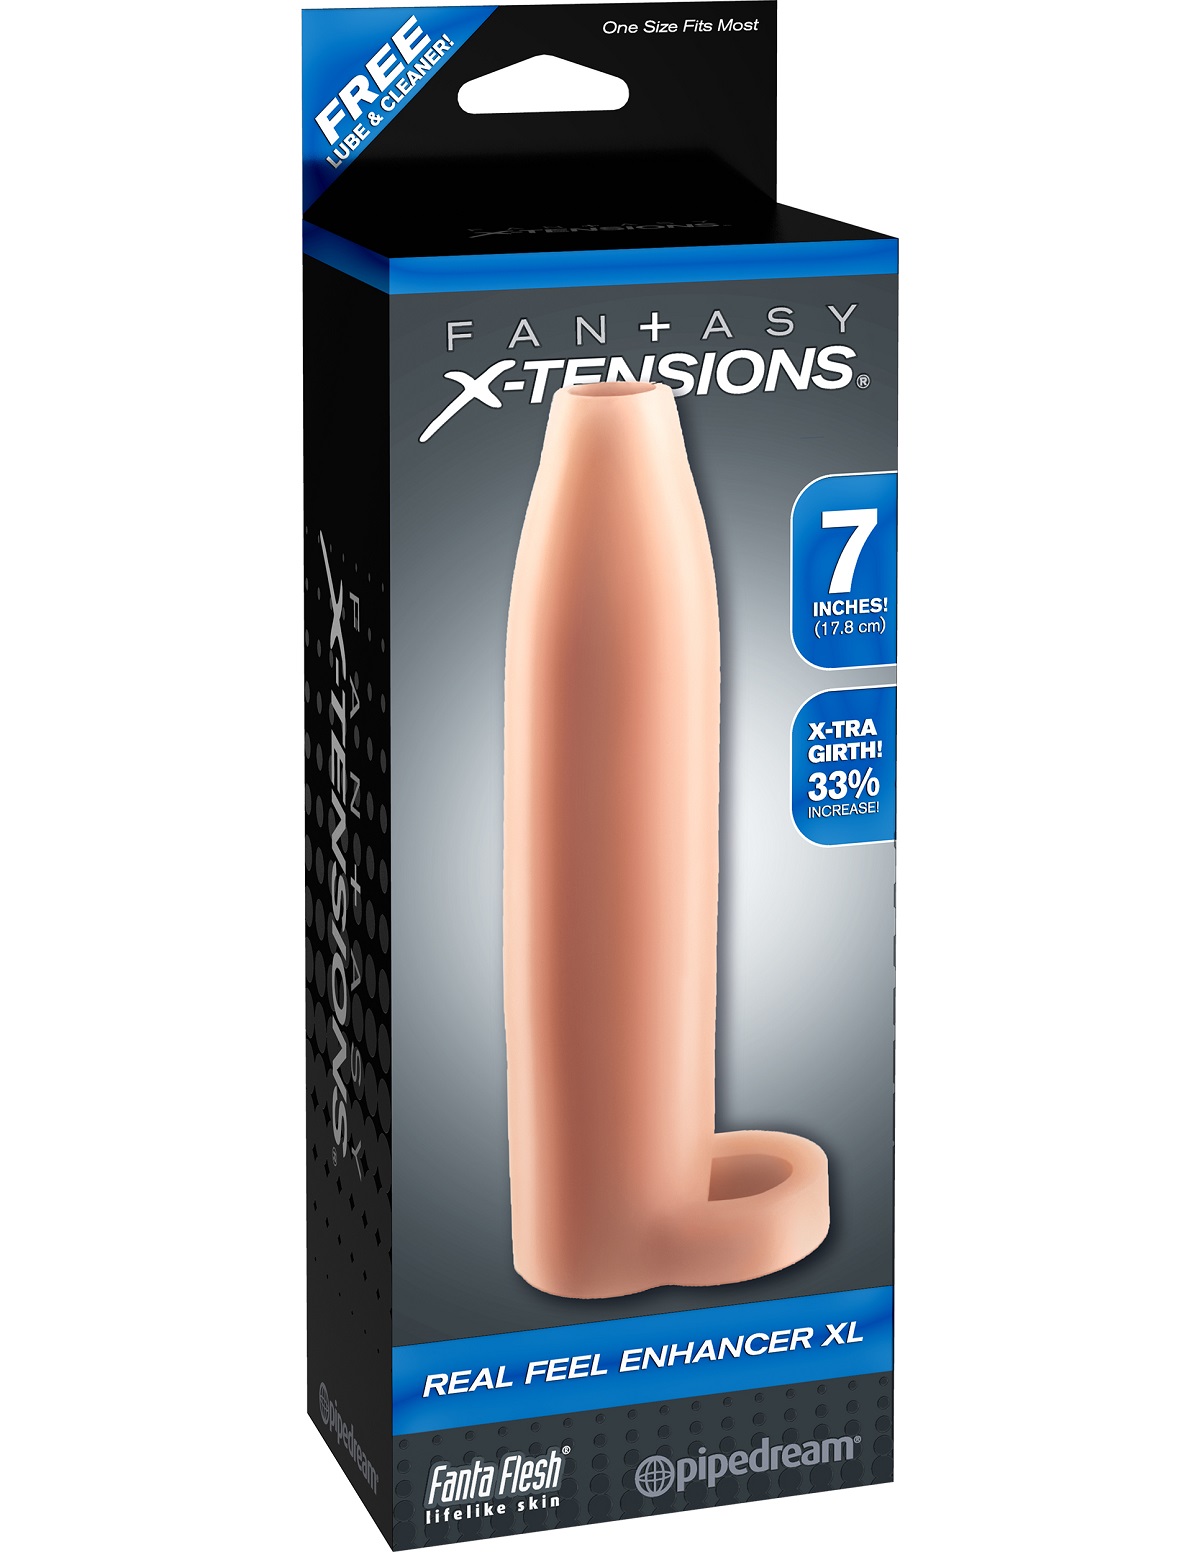     Real Feel Enhancer XL,      X-tensions